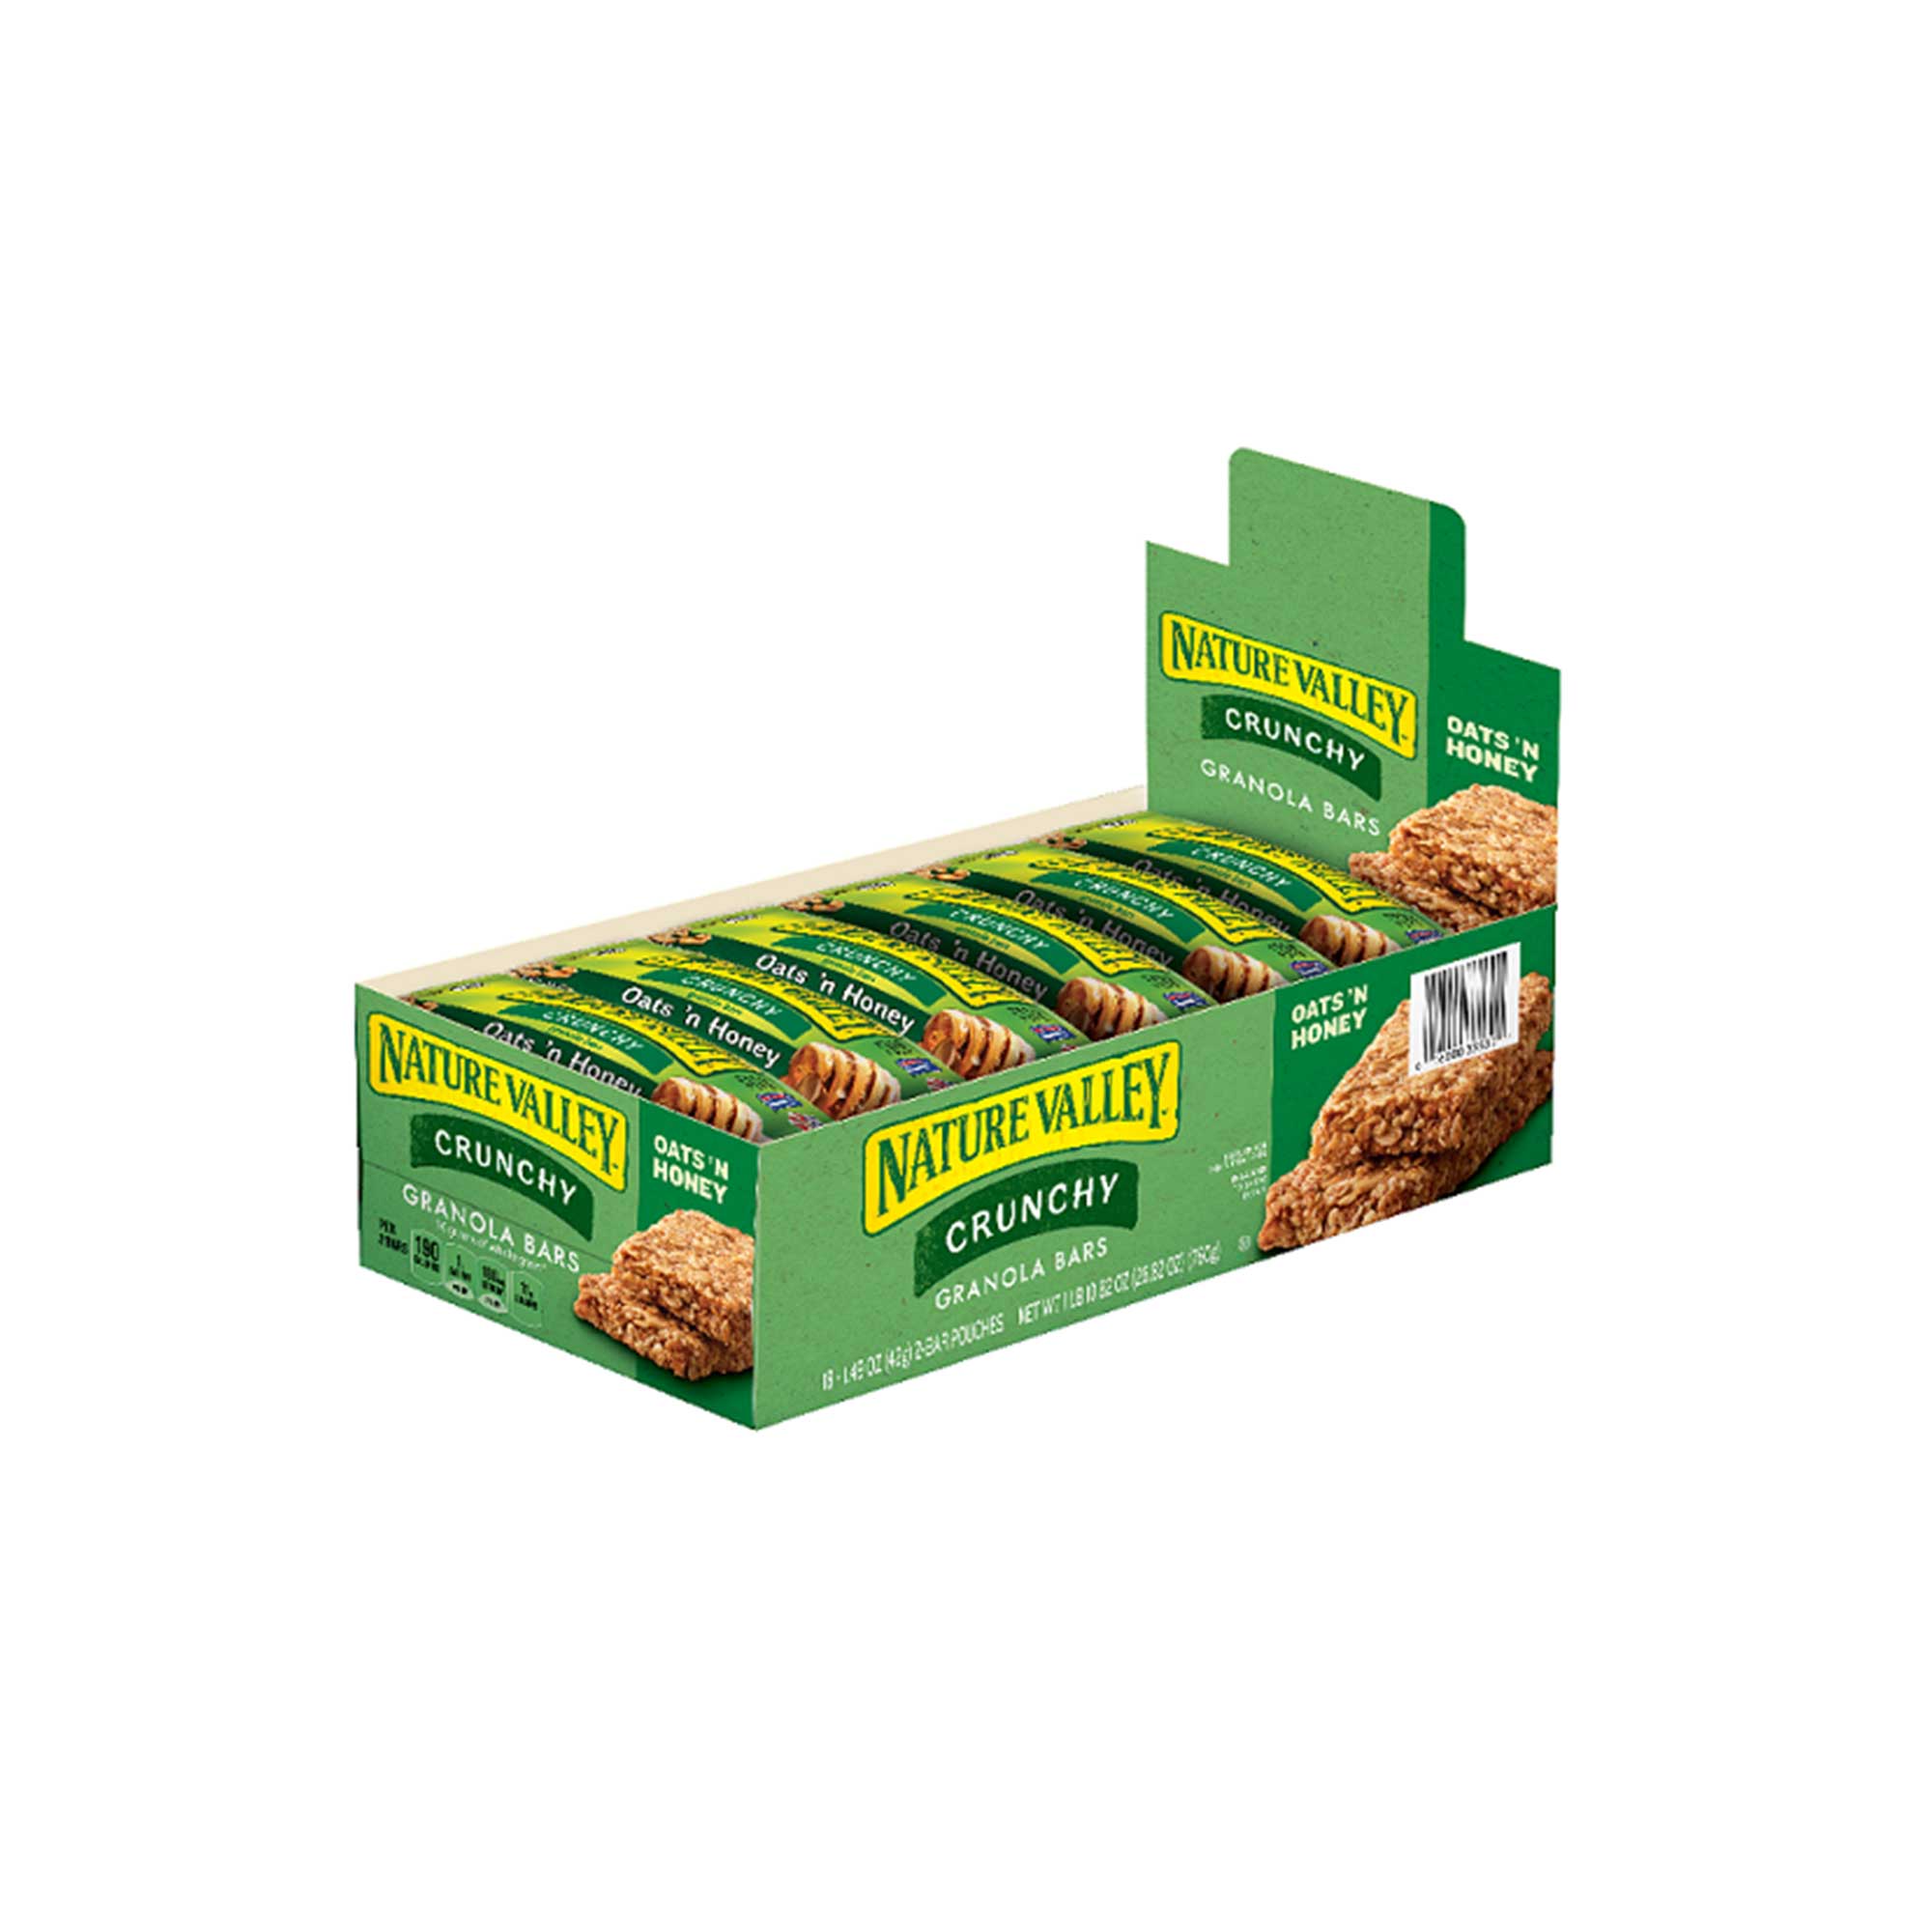 Nature Valley Granola Bars, Oats 'N Honey, Crunchy - 12 pack, 1.49 oz